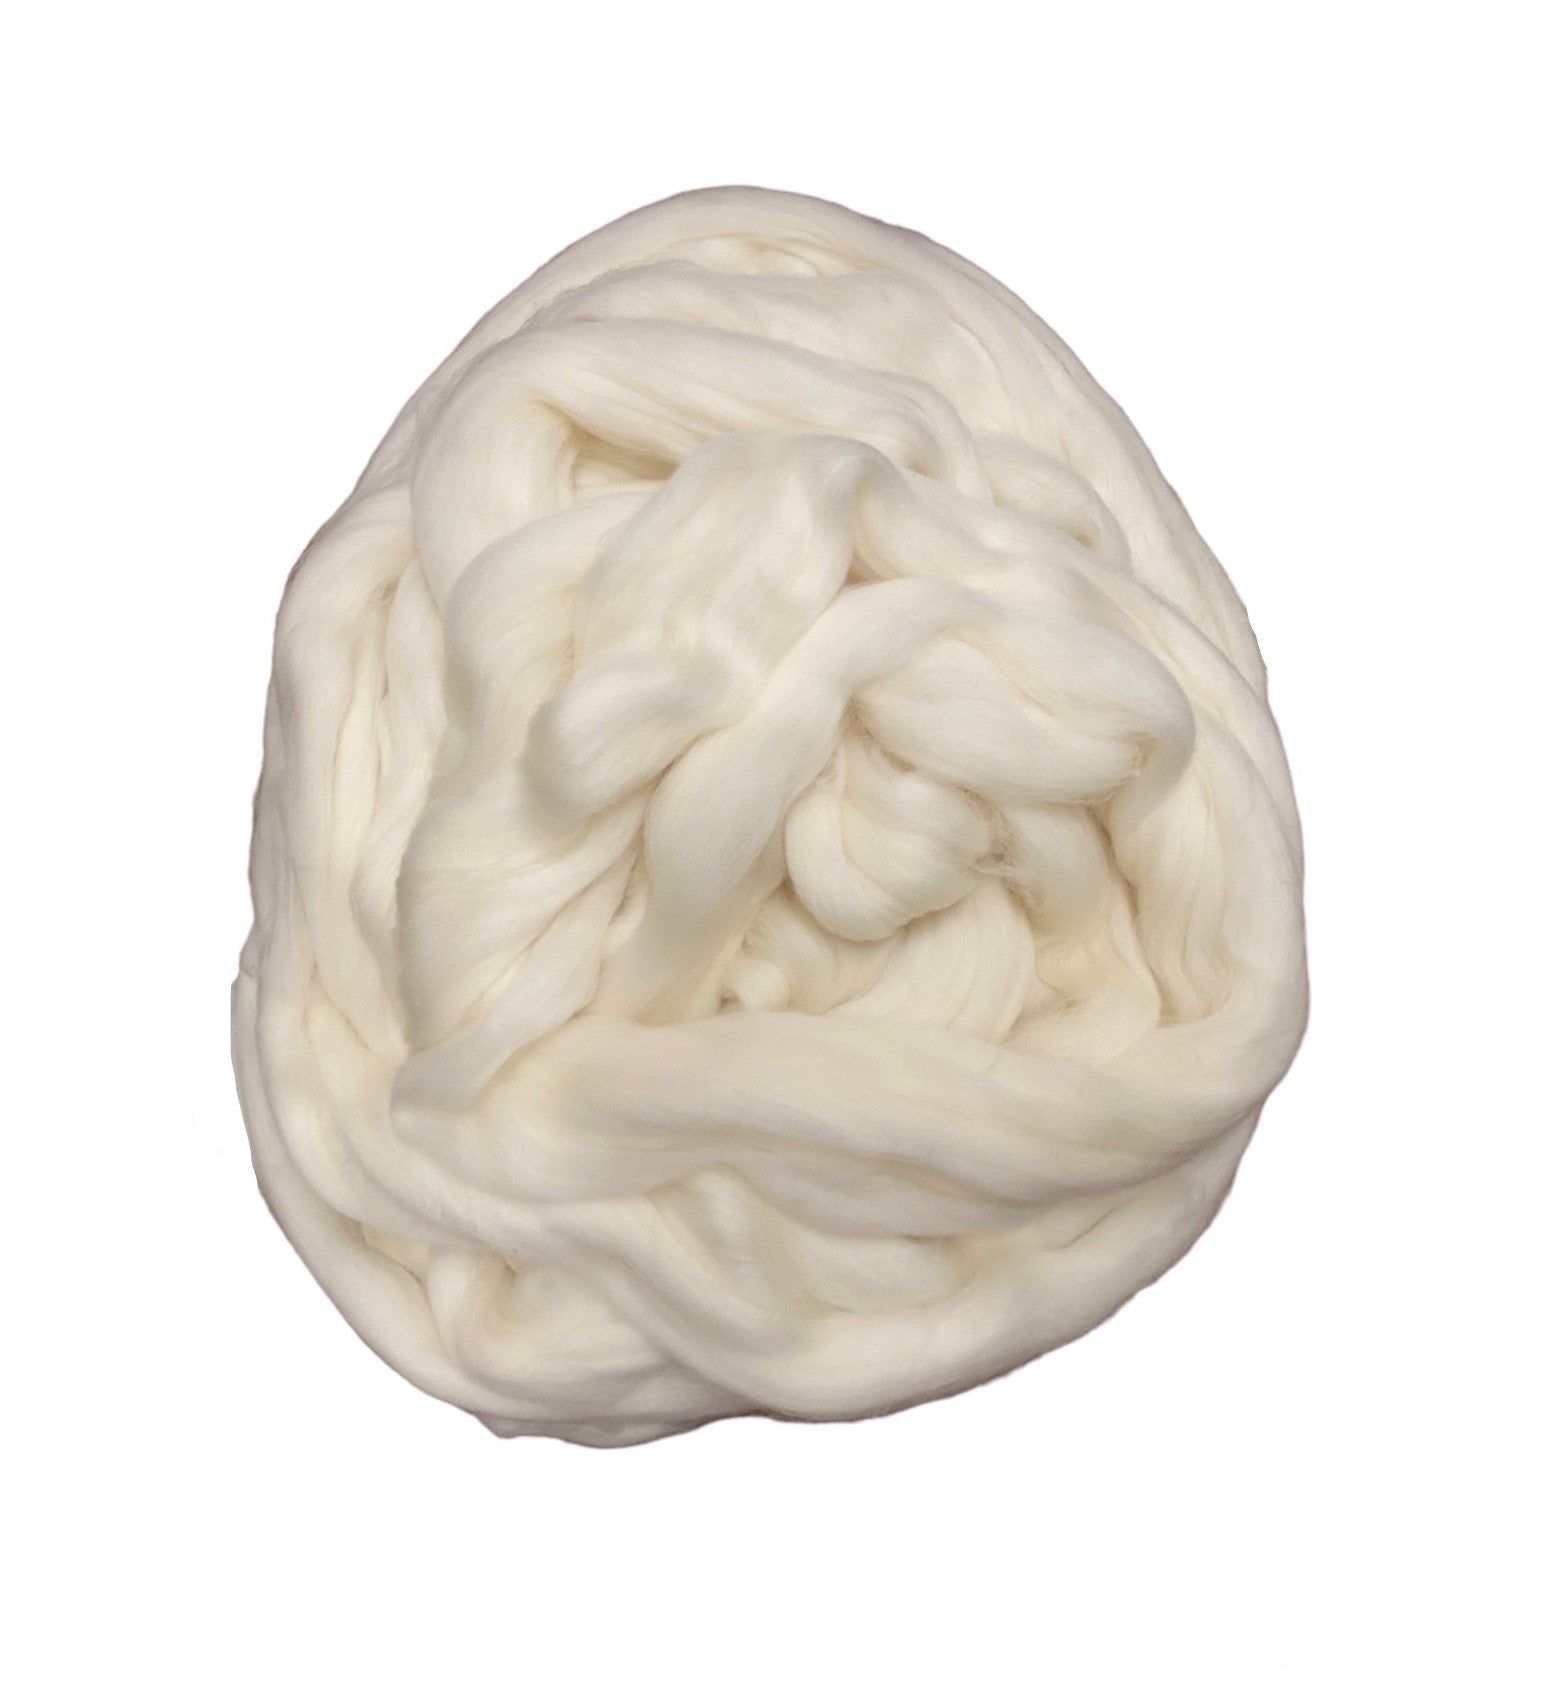 30 lb Natural White Wool Top Roving Fiber Spinning, Felting, Crafts Fresh Milled